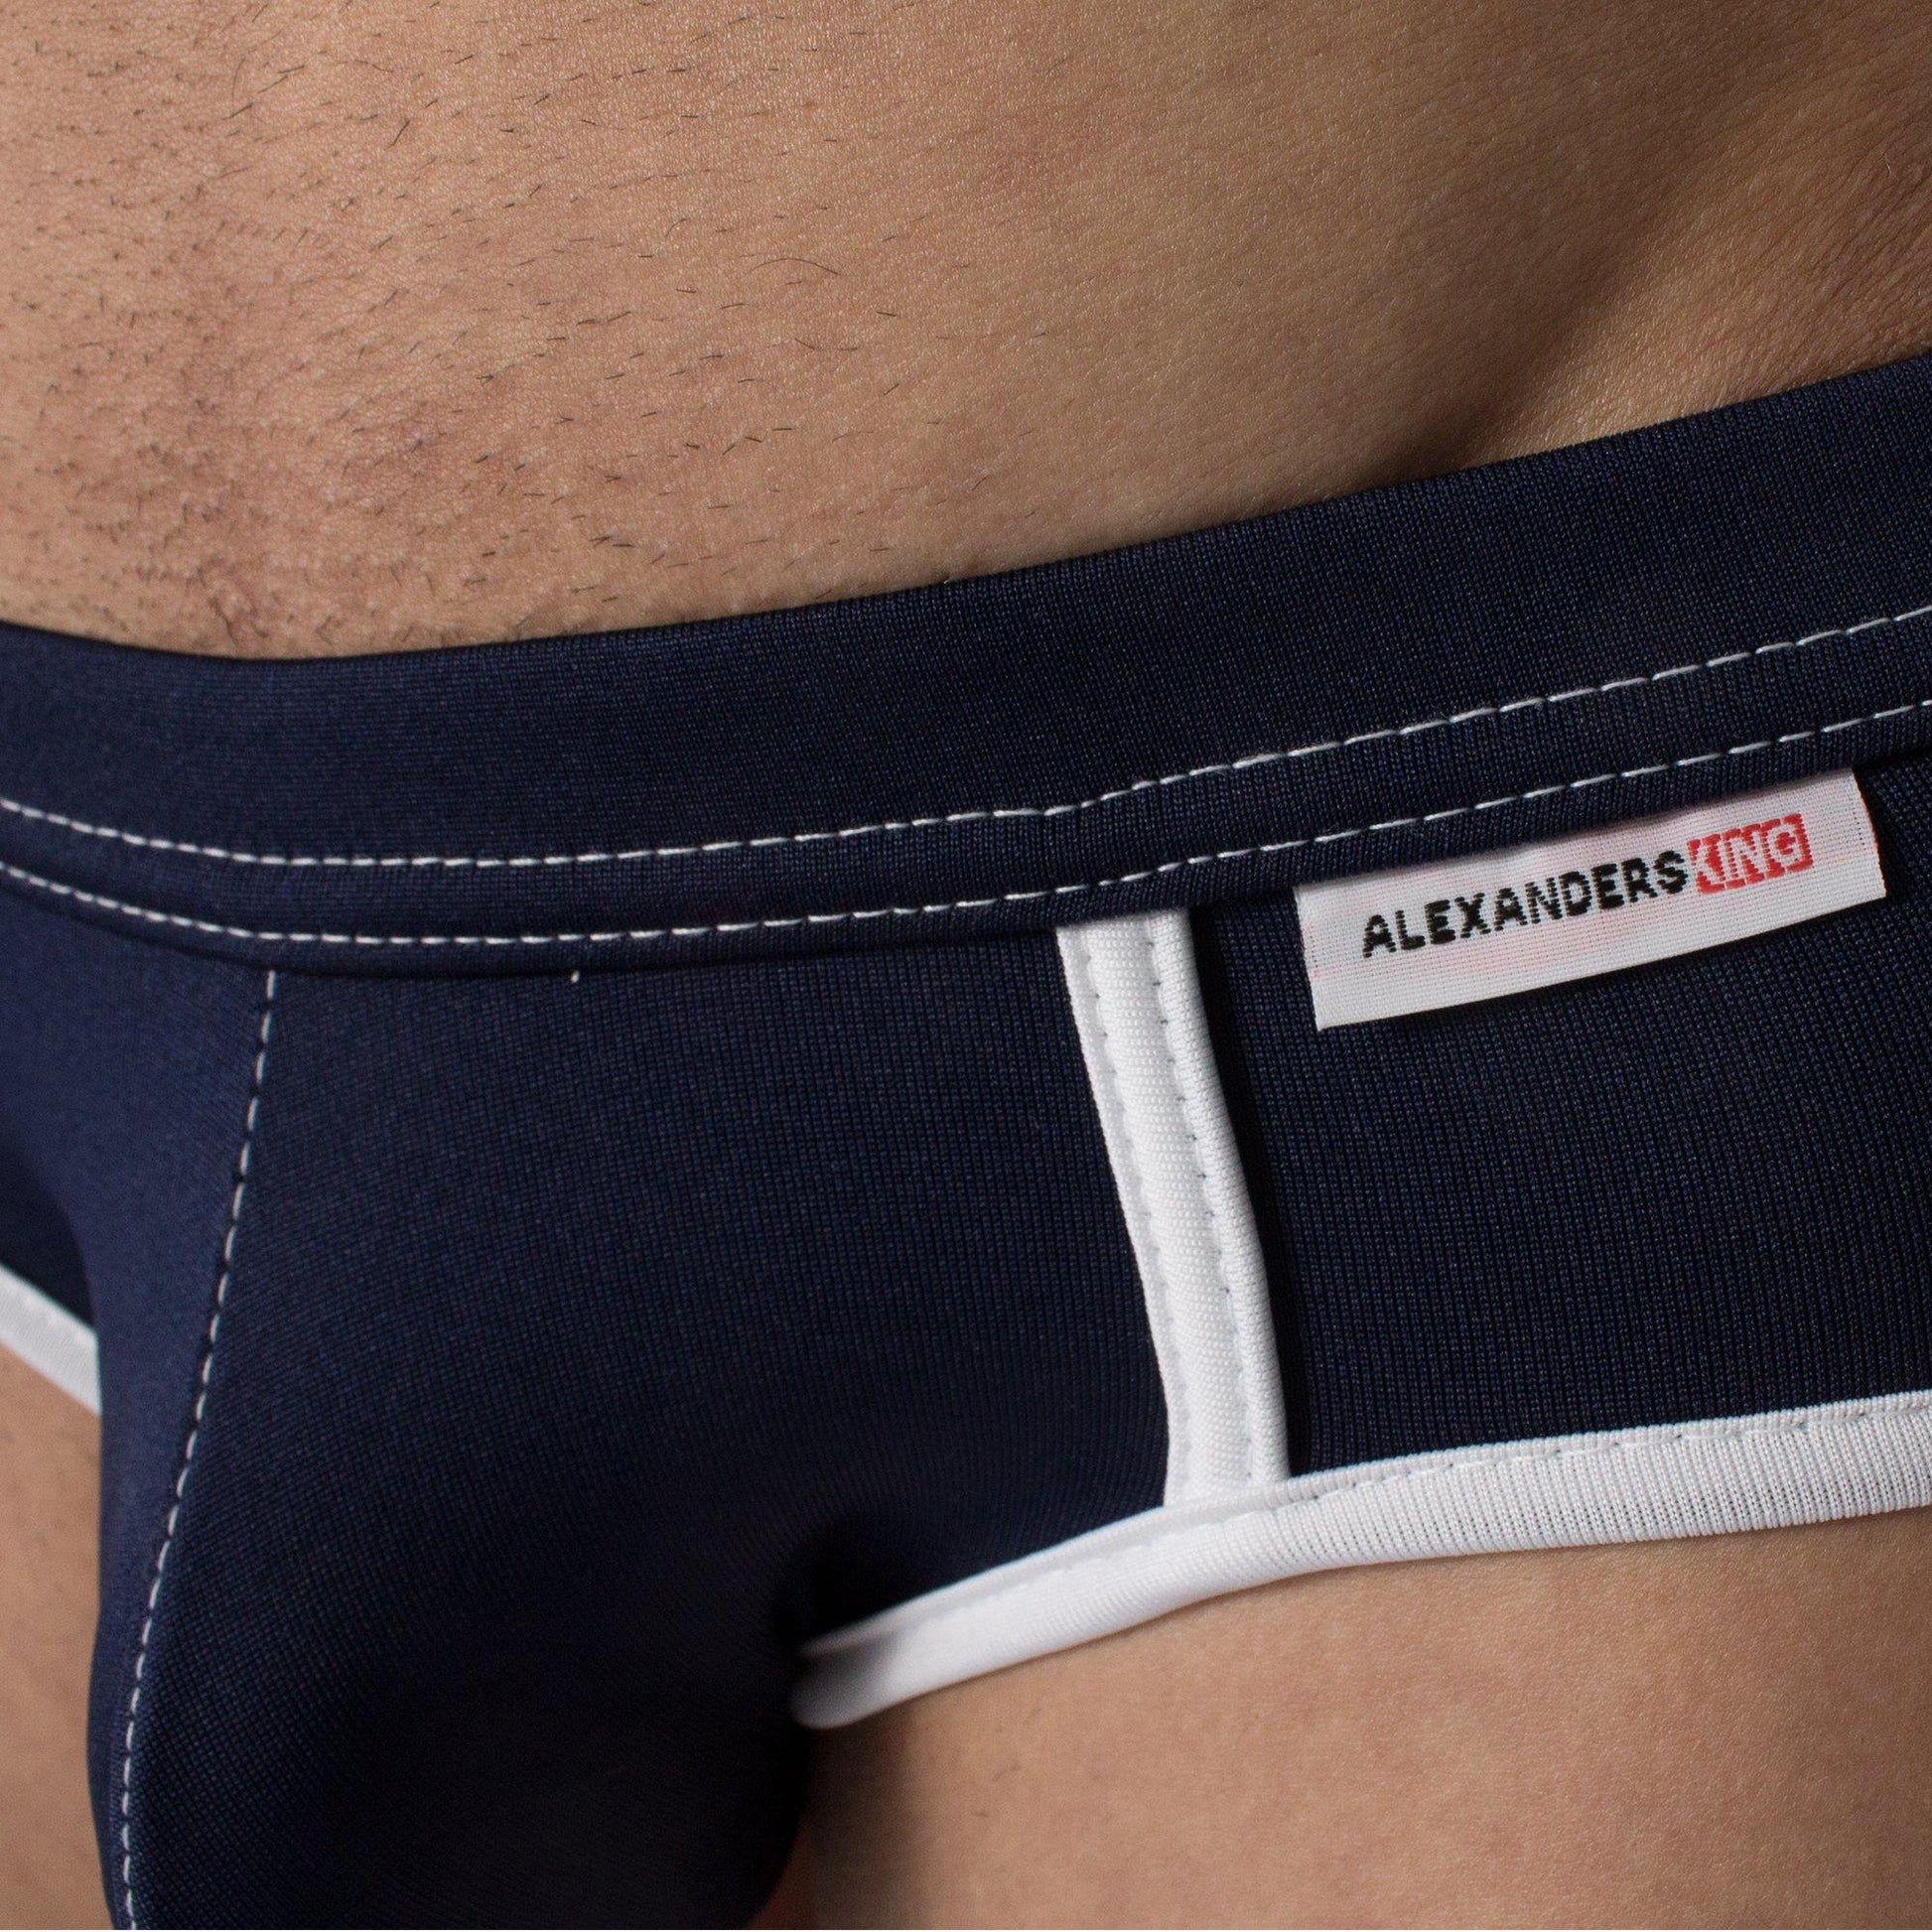 PB0003 - Brief Chroma Azul Marino Skinit - AlexandersKing Underwear